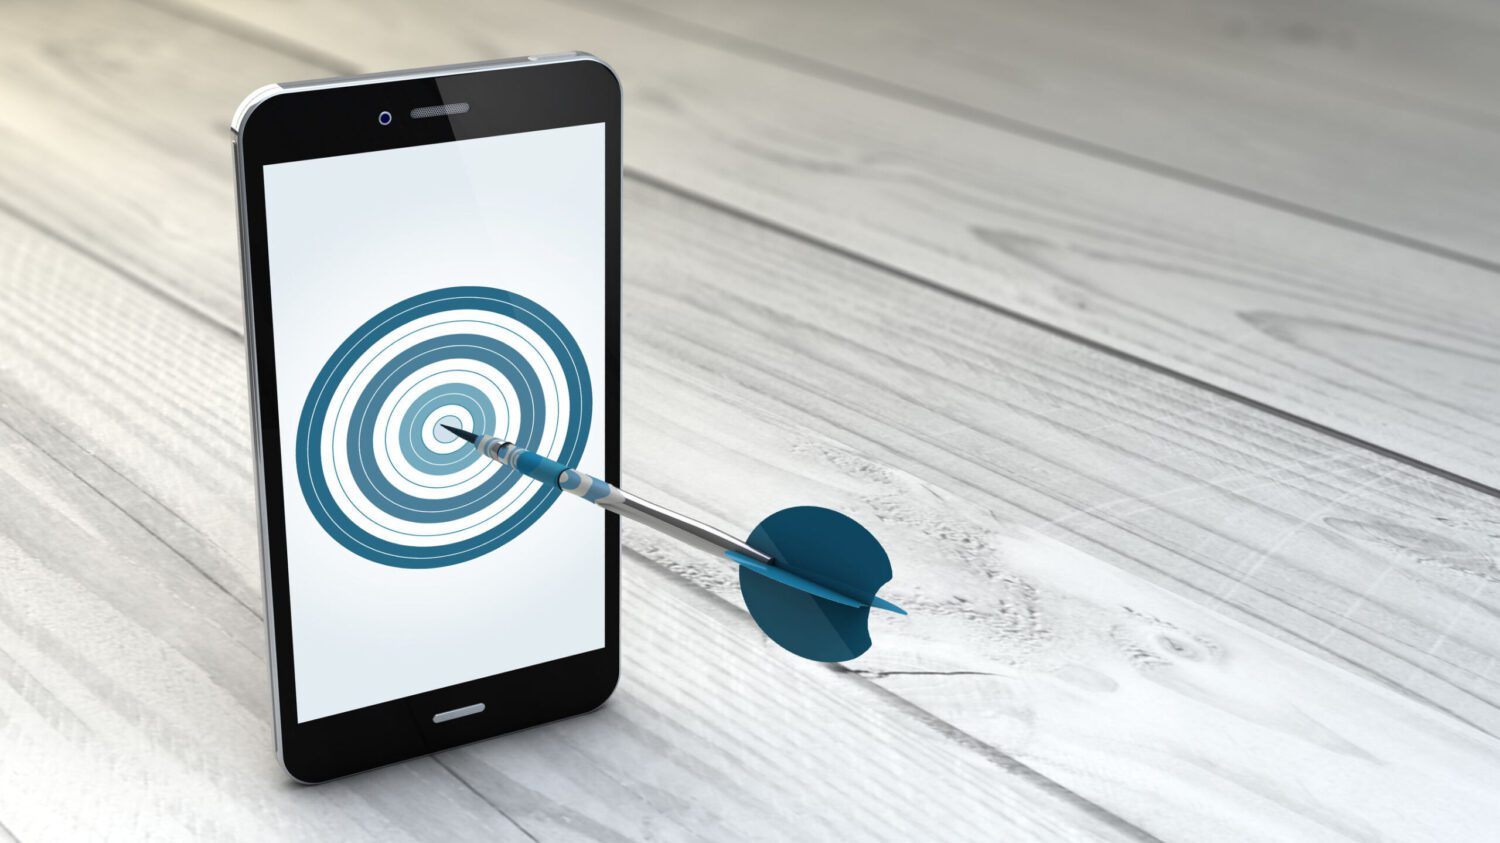 A blue dart hitting a bullseye on a dartboard on a phone screen.